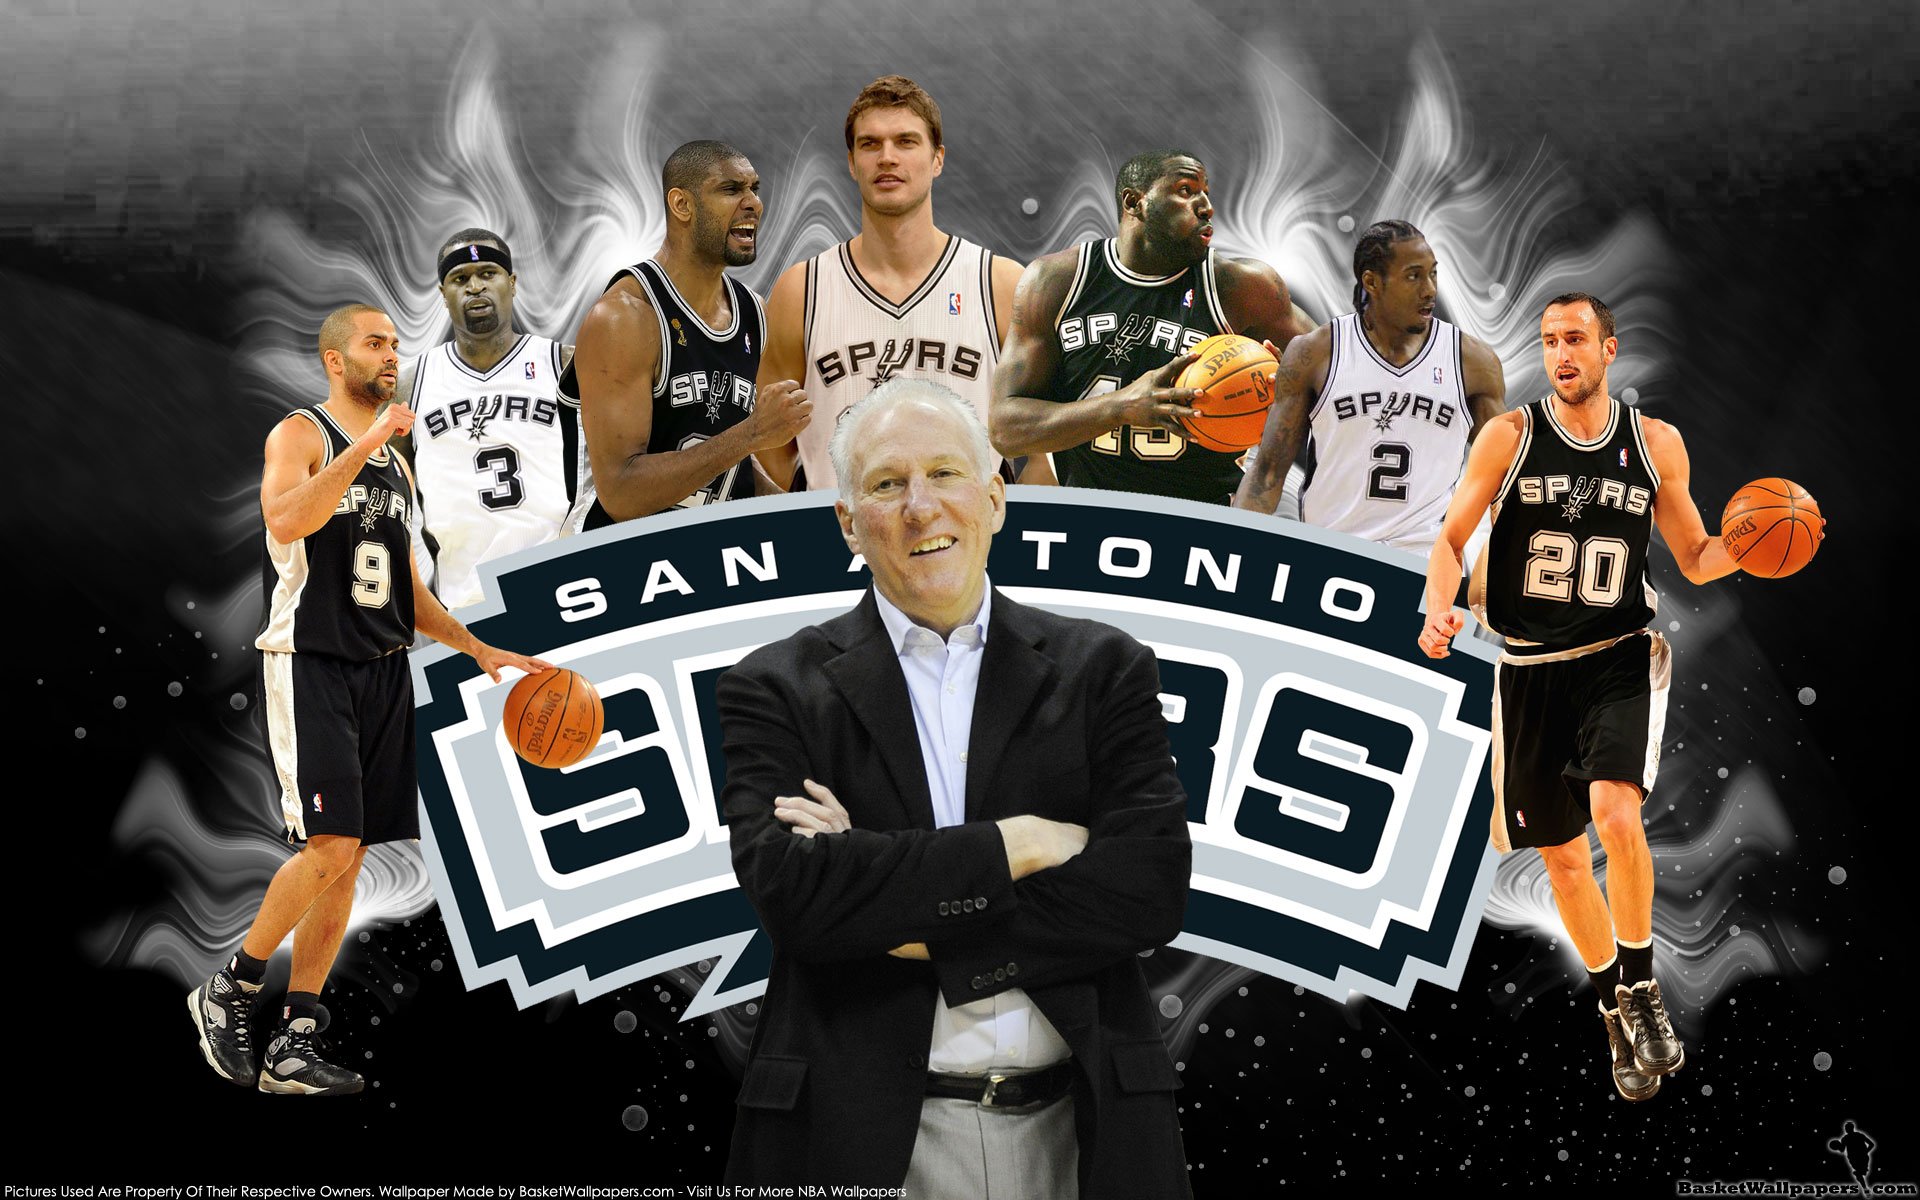 Free San Antonio Spurs desktop image San Antonio Spurs wallpapers